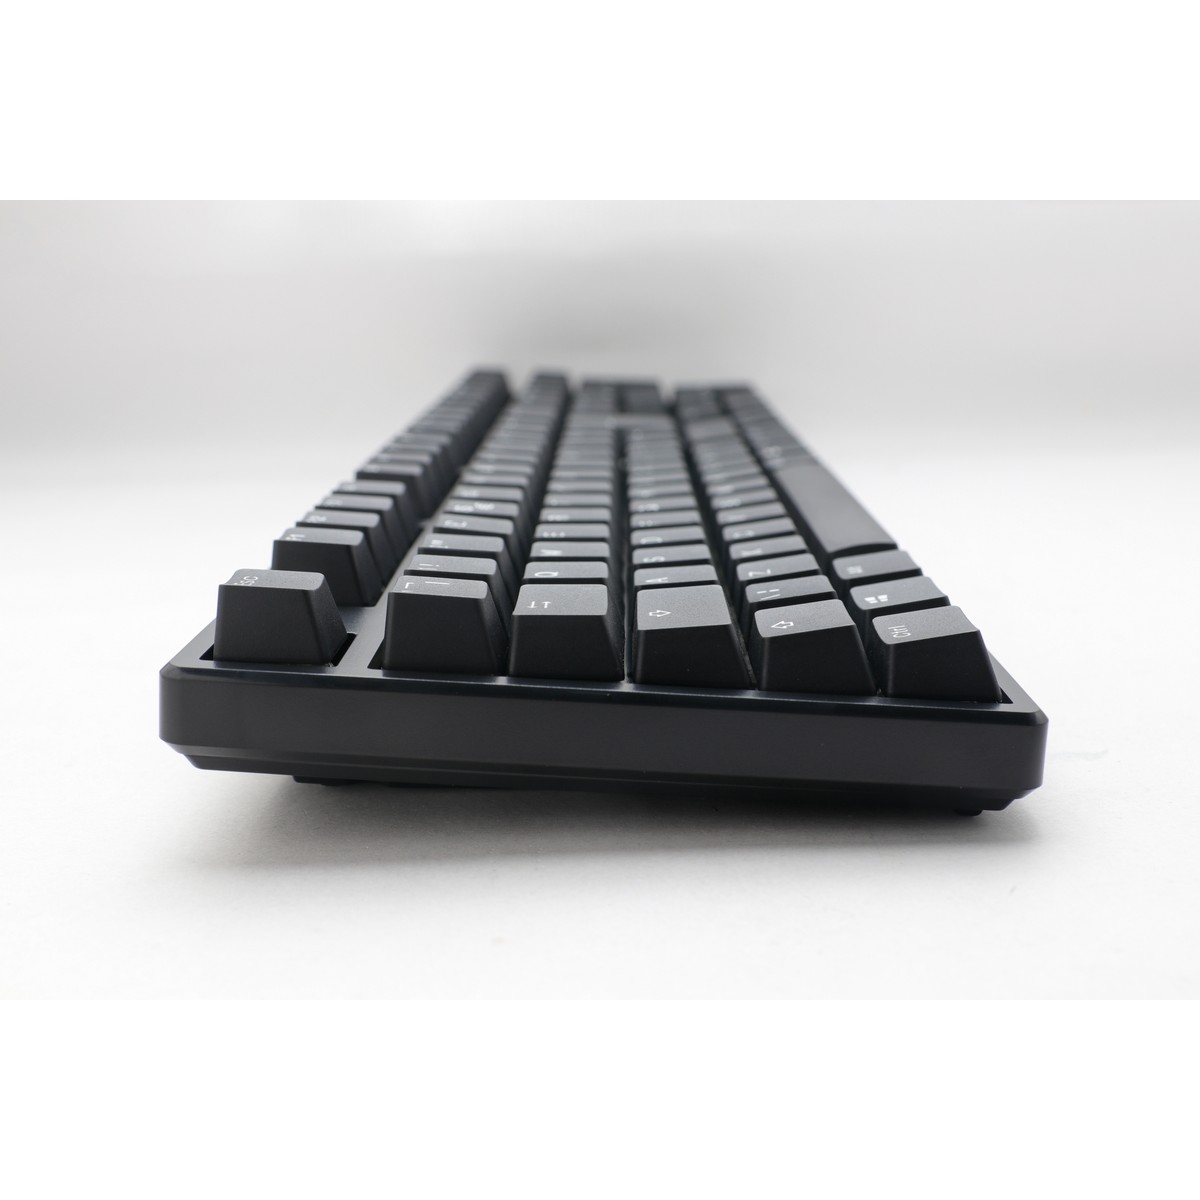 Ducky - Ducky Origin USB Mechanical Gaming Keyboard Cherry MX Red - Black UK Layout